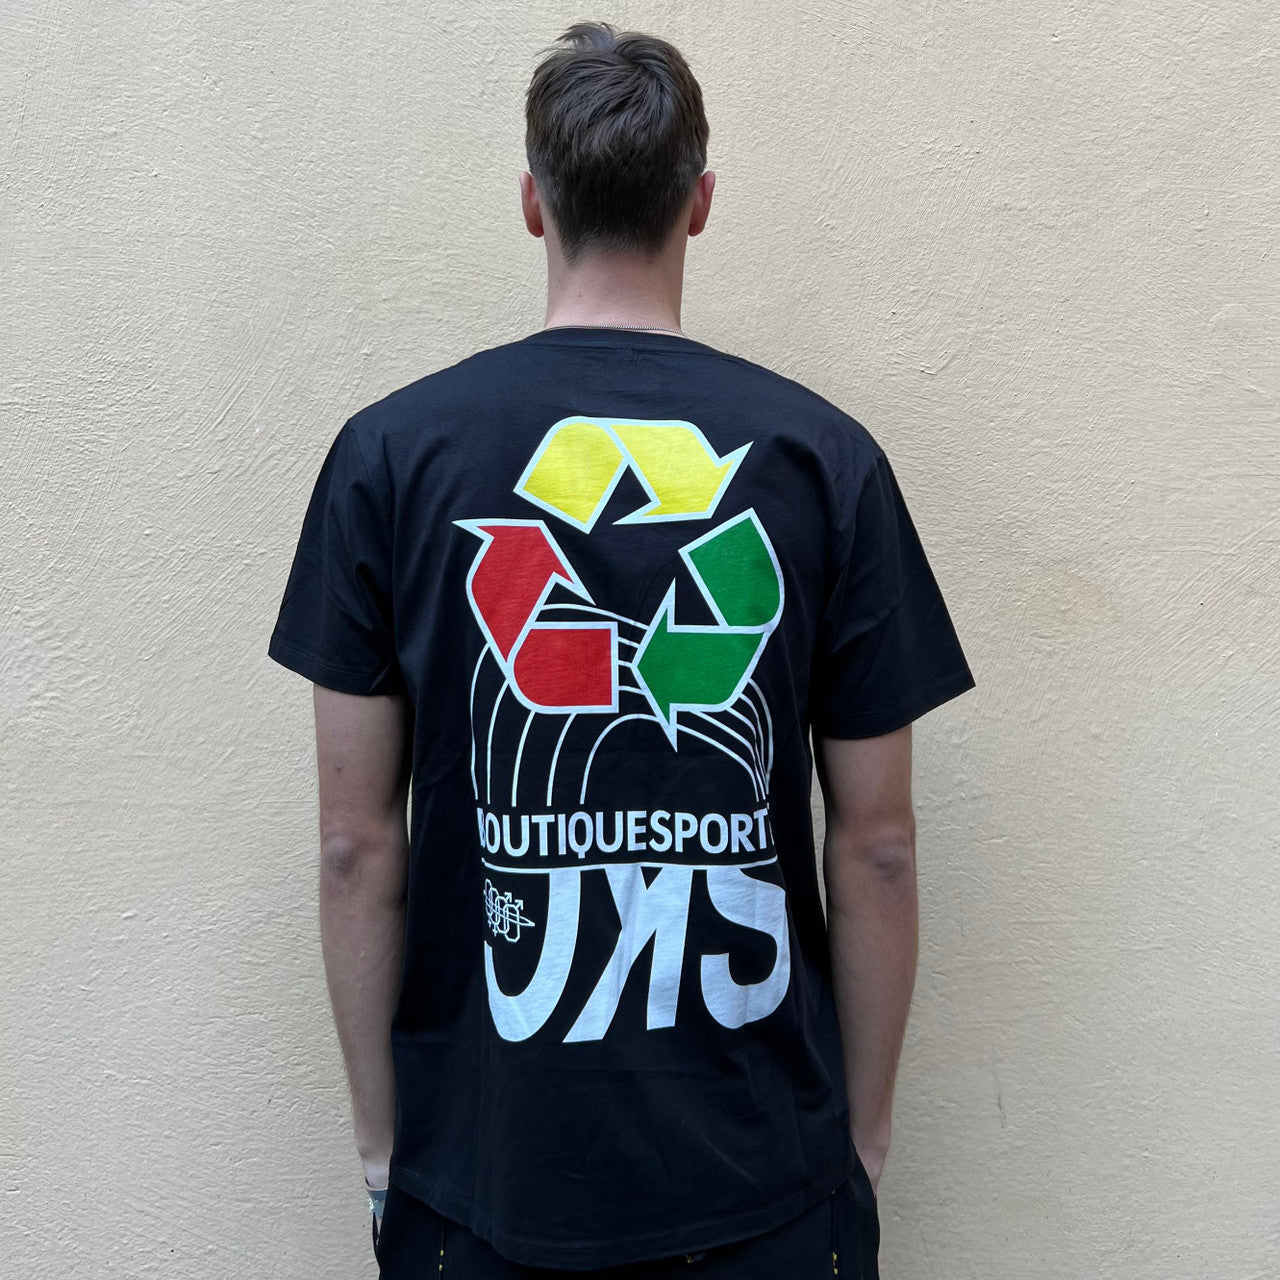 Boutique Sportif Reuse Recycle Reggae Black Tshirt